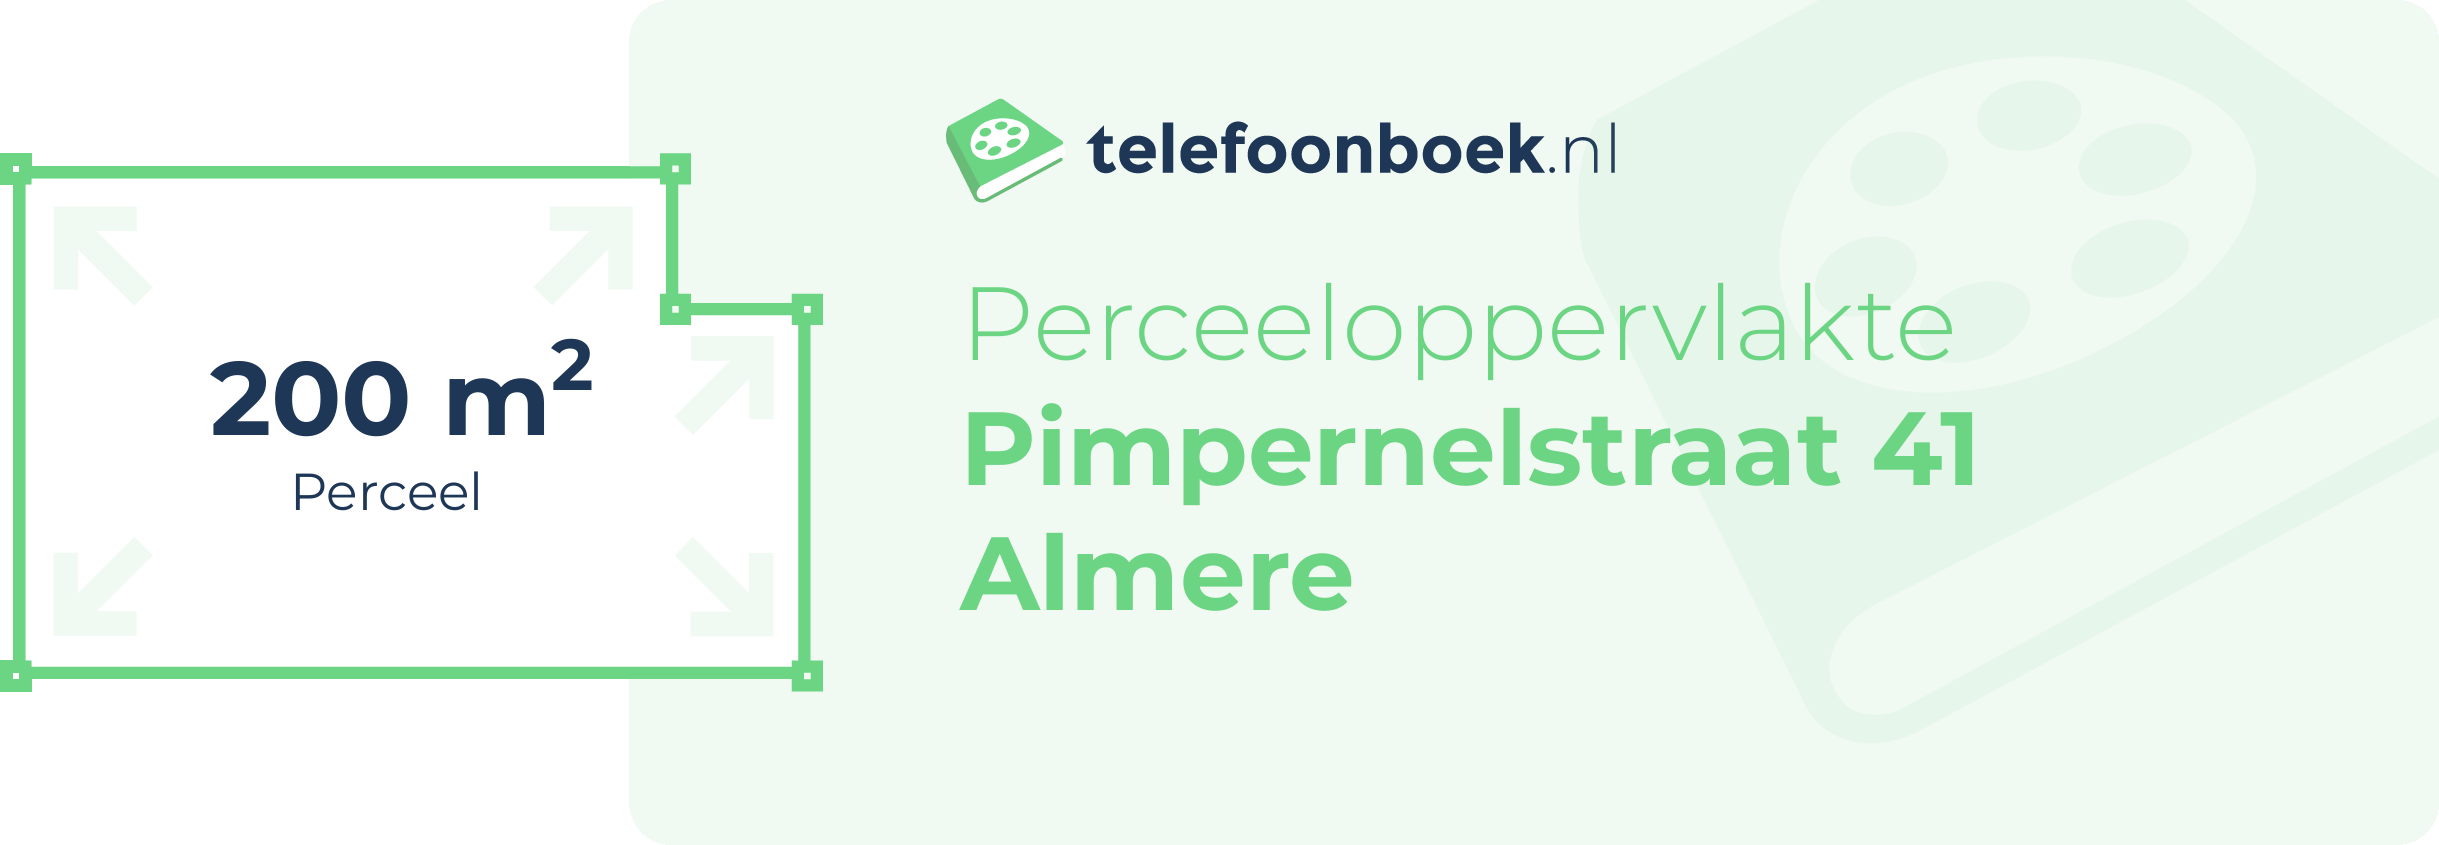 Perceeloppervlakte Pimpernelstraat 41 Almere